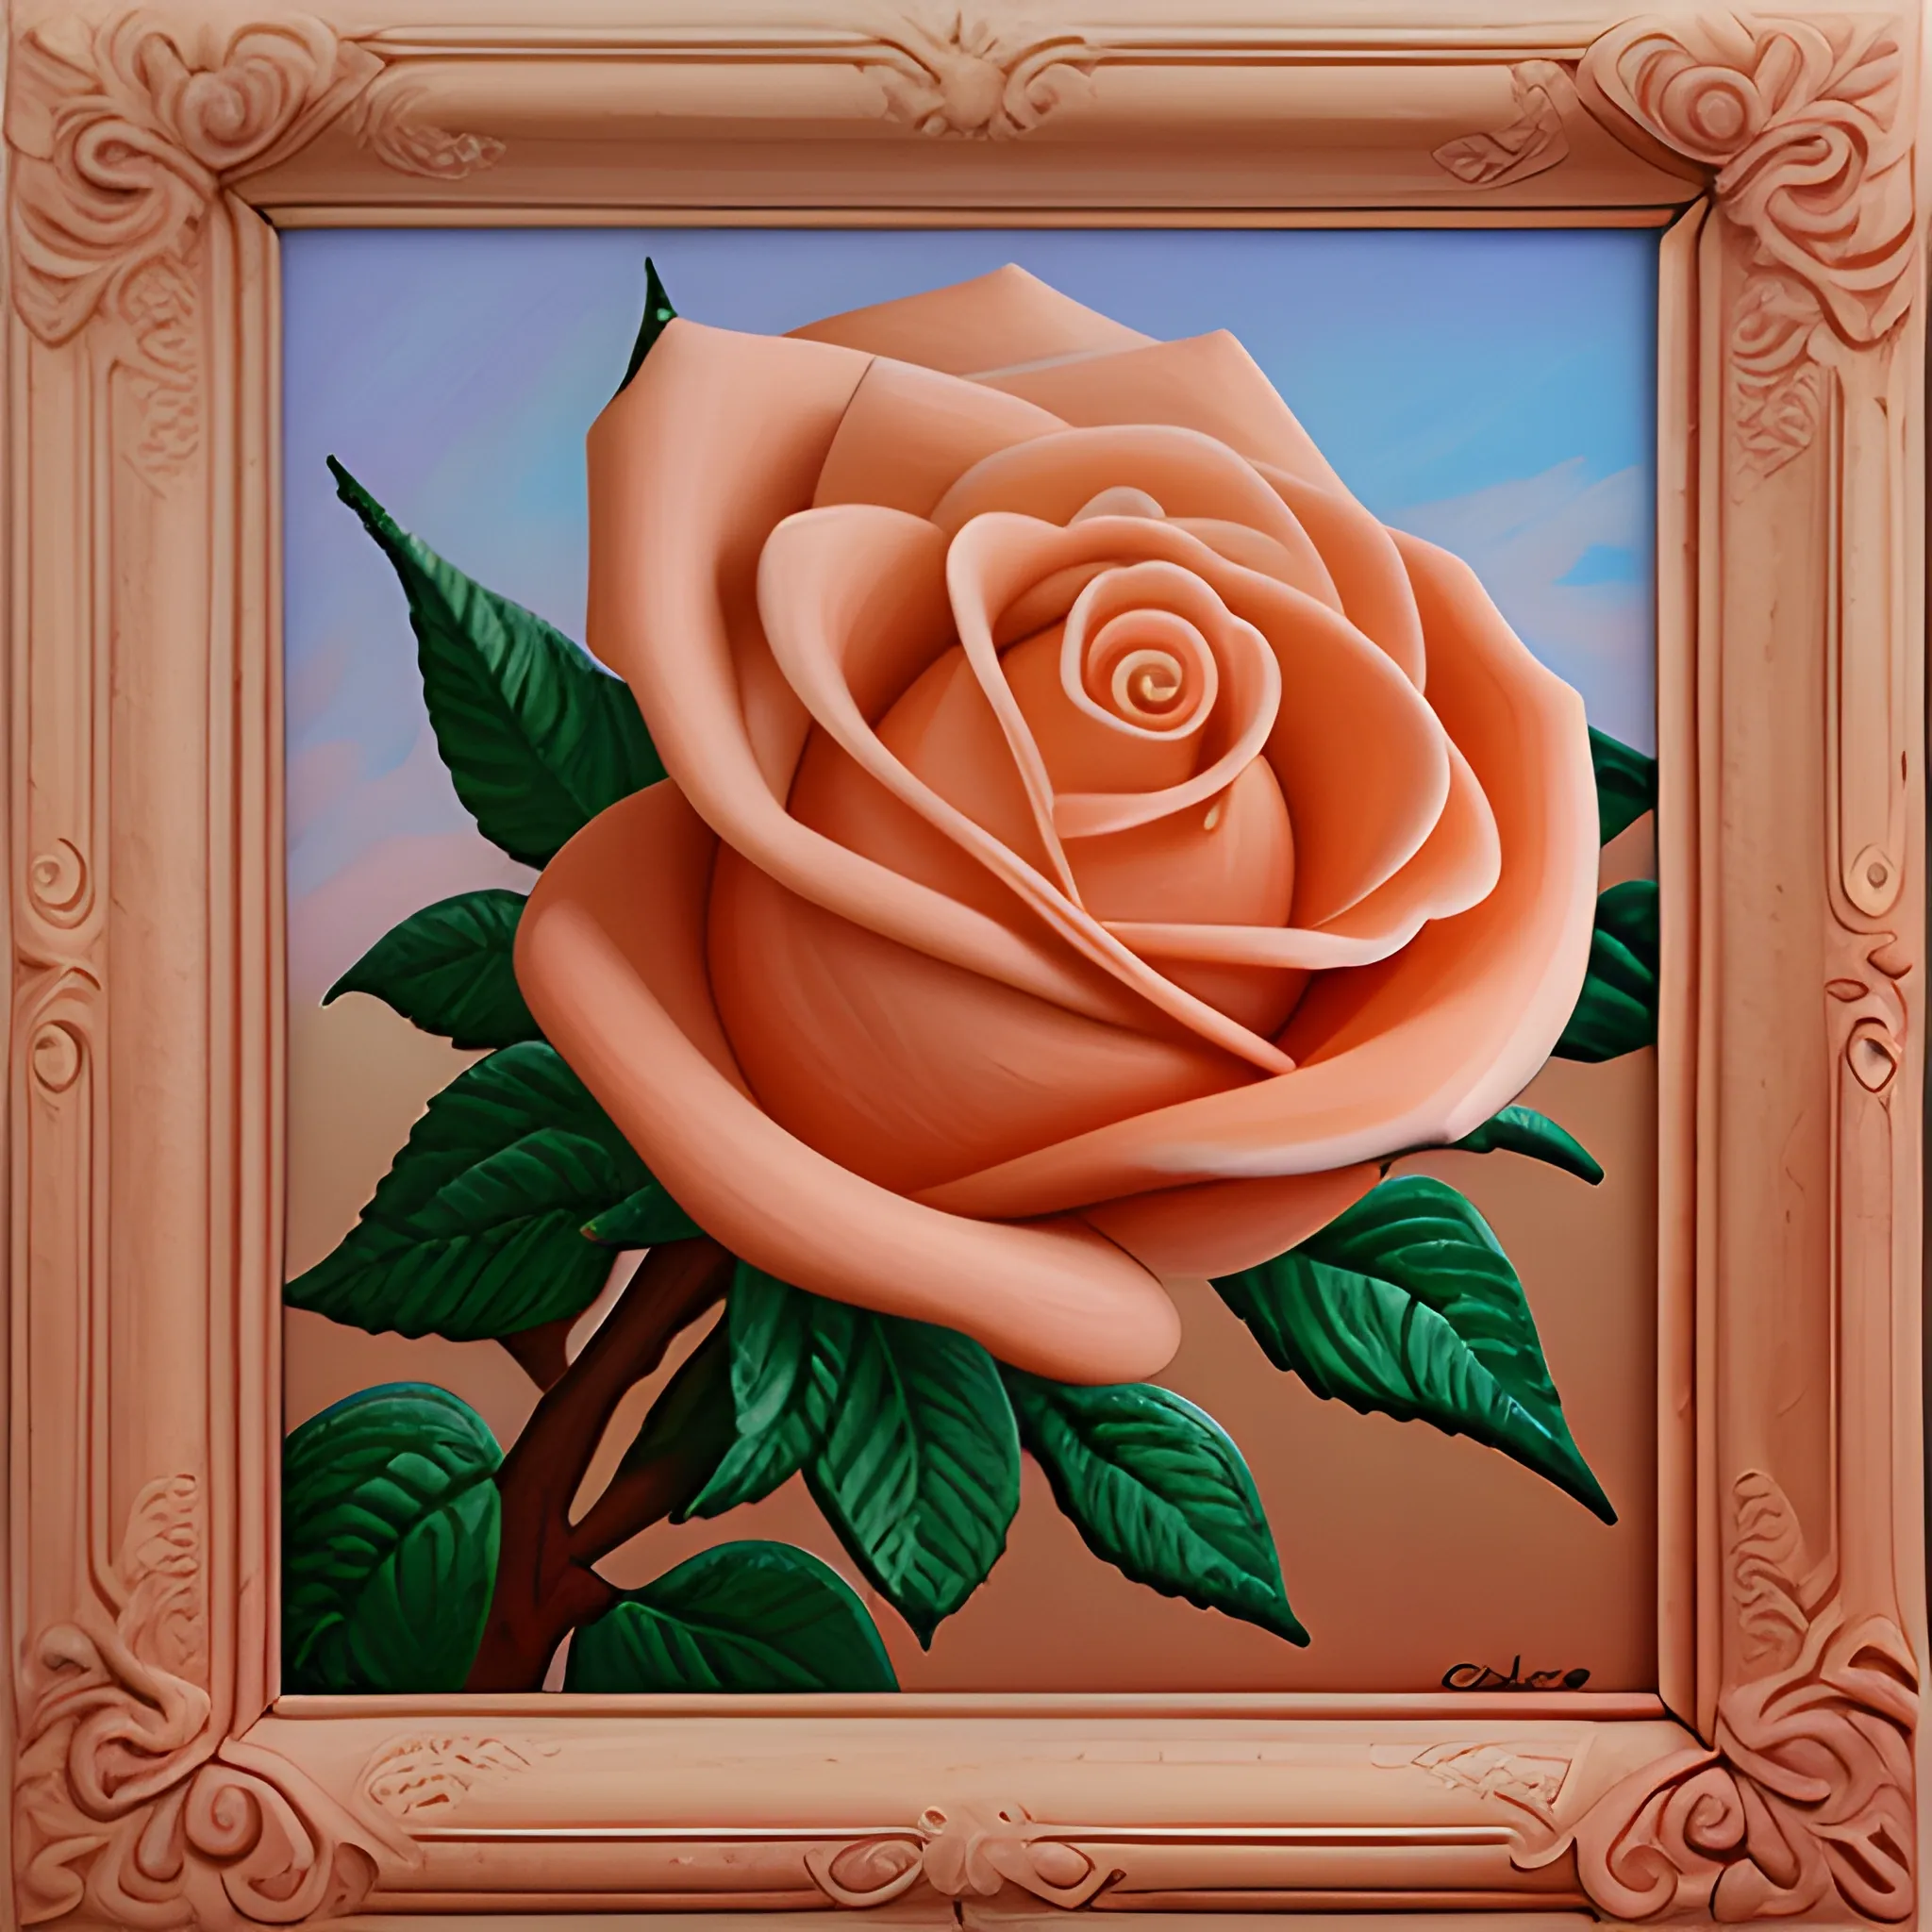 terra cotta rose oil painting
